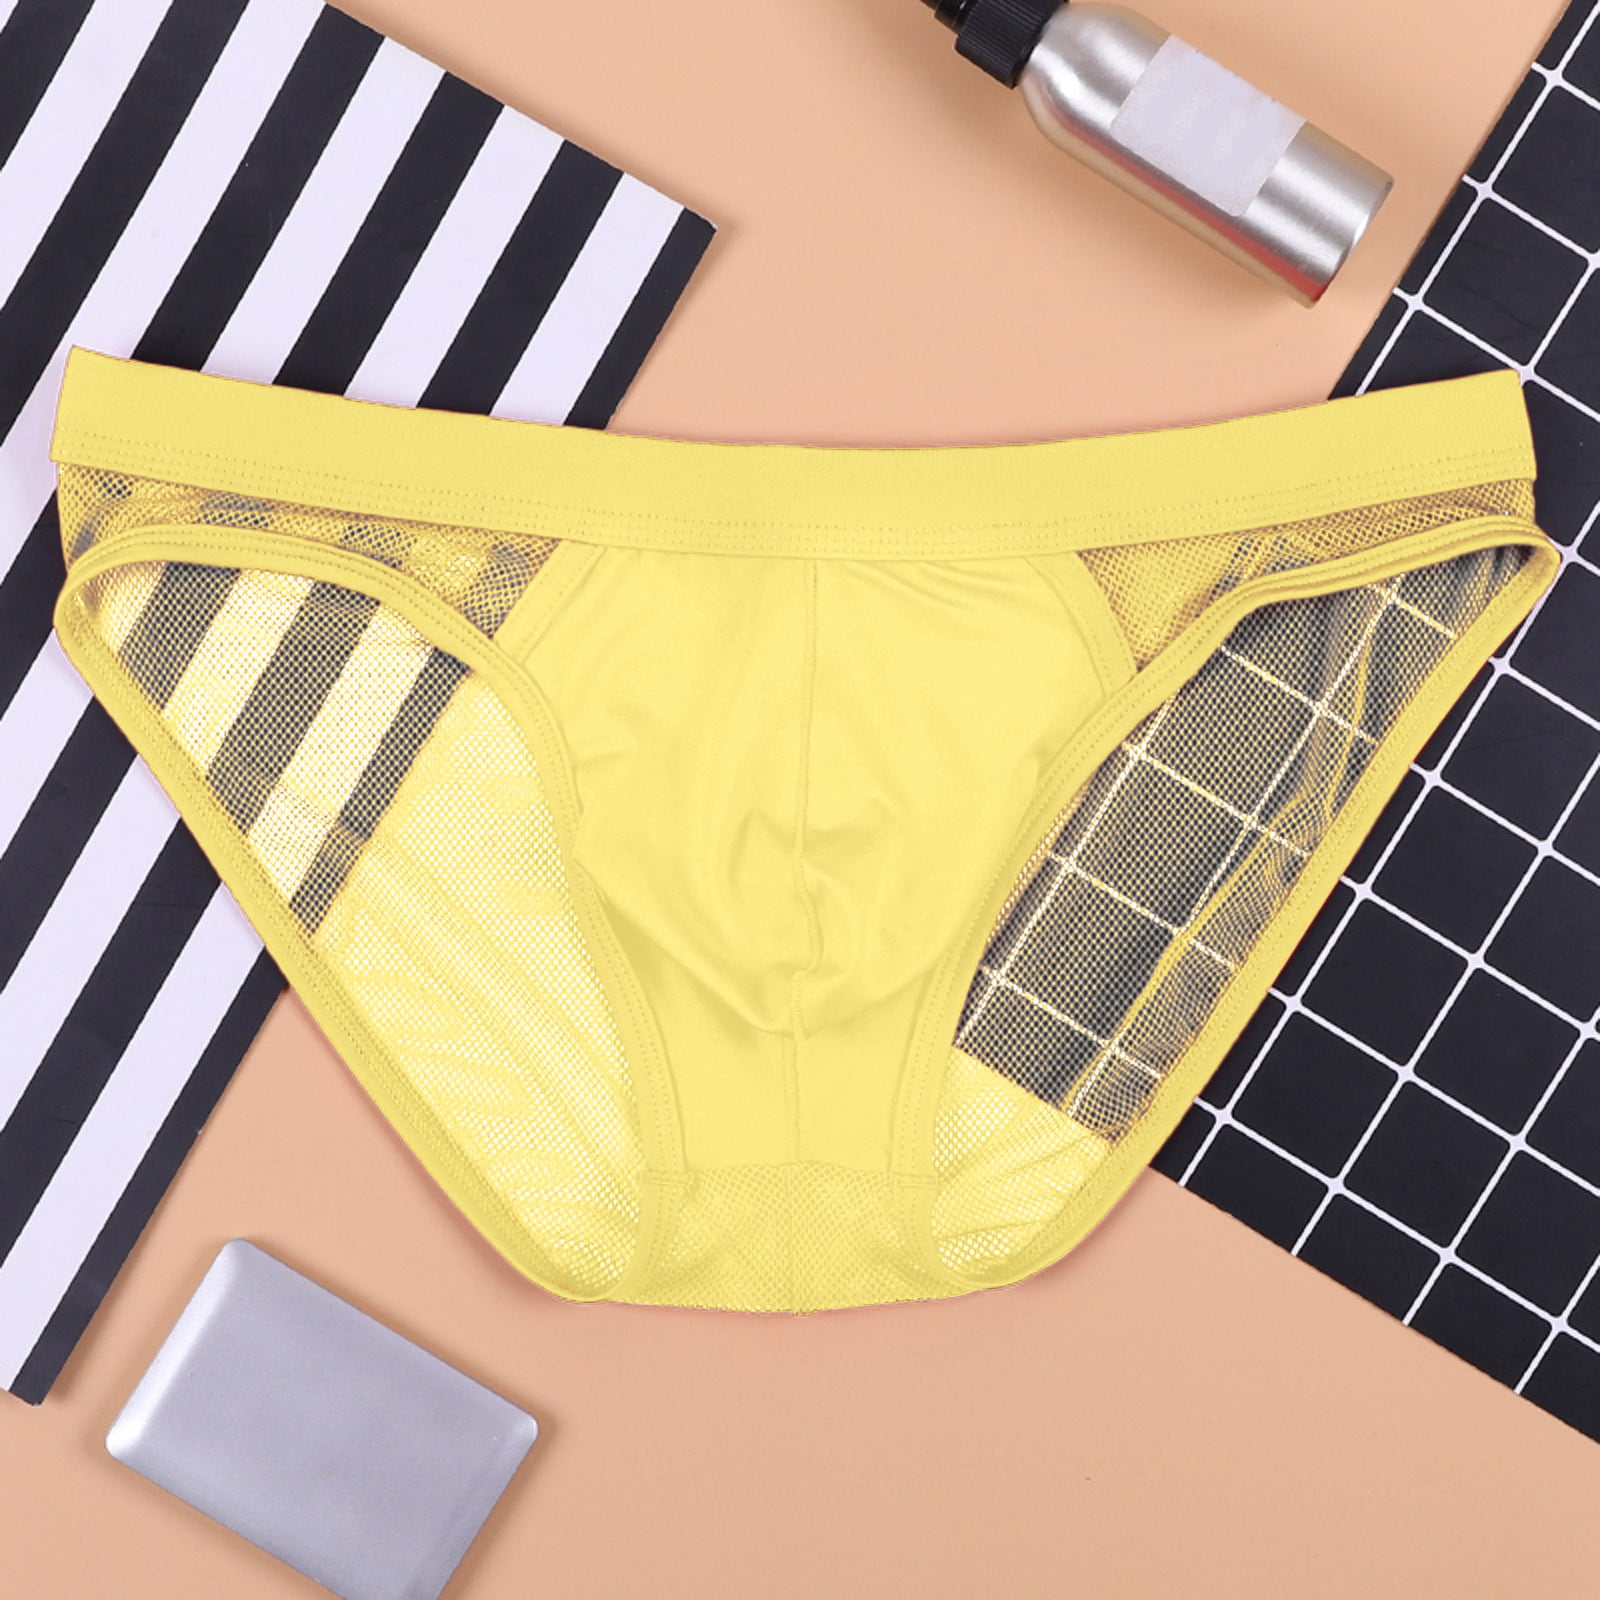 Gubotare Brief For Men Mens Explosion Slip Bikini Underpants Printed Design  Thong Pouch Underwear,White S 